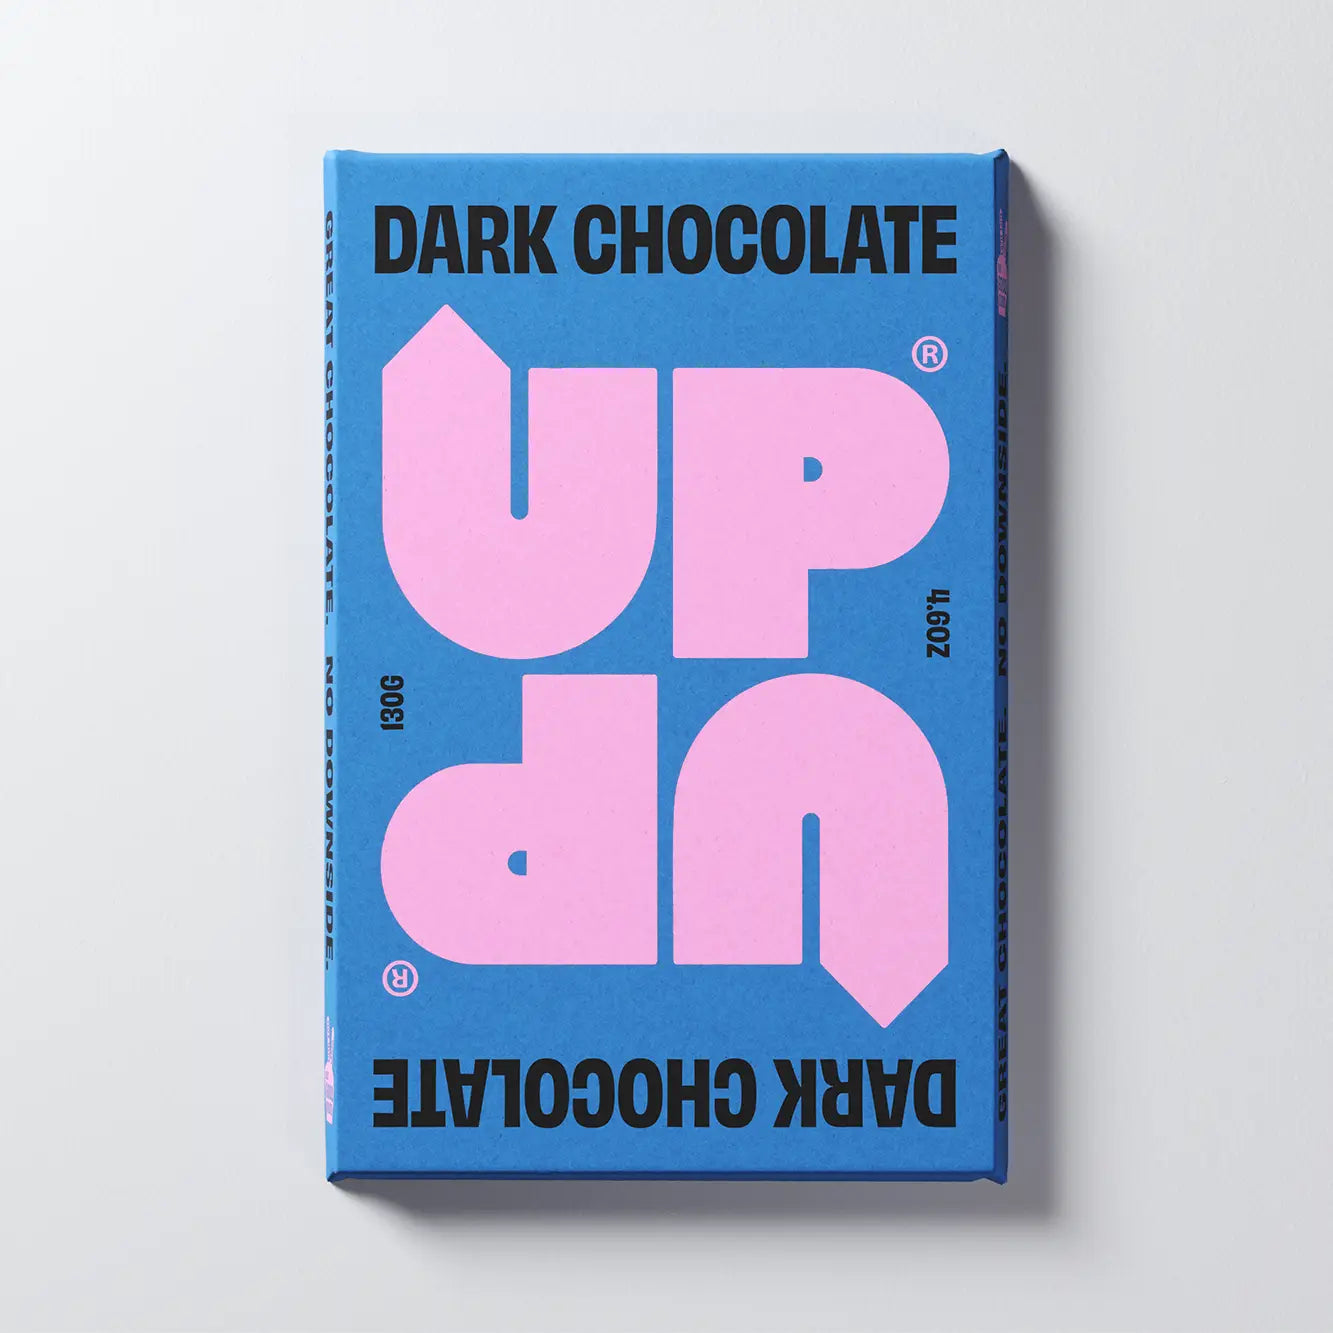 DARK CHOCOLATE BAR BY UP UP 130g